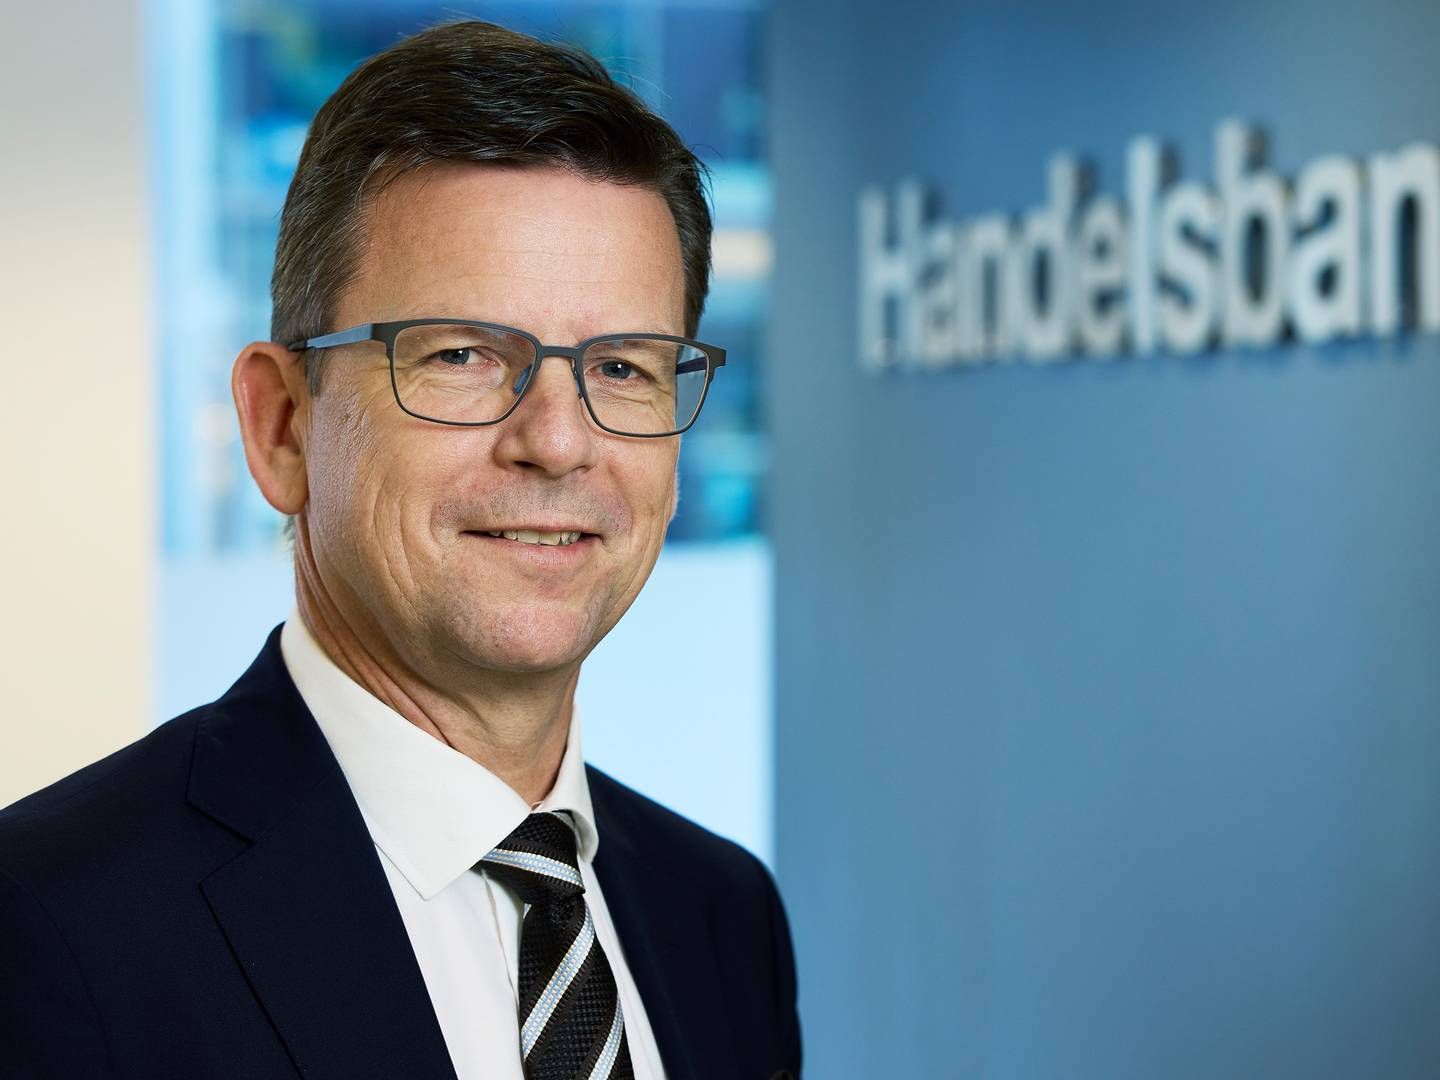 INVESTERER I FOLK: Handelsbanken passerer 1000 ansatte i Norge med oppbemanningen som har startet. | Foto: Bård Gudim / Handelsbanken